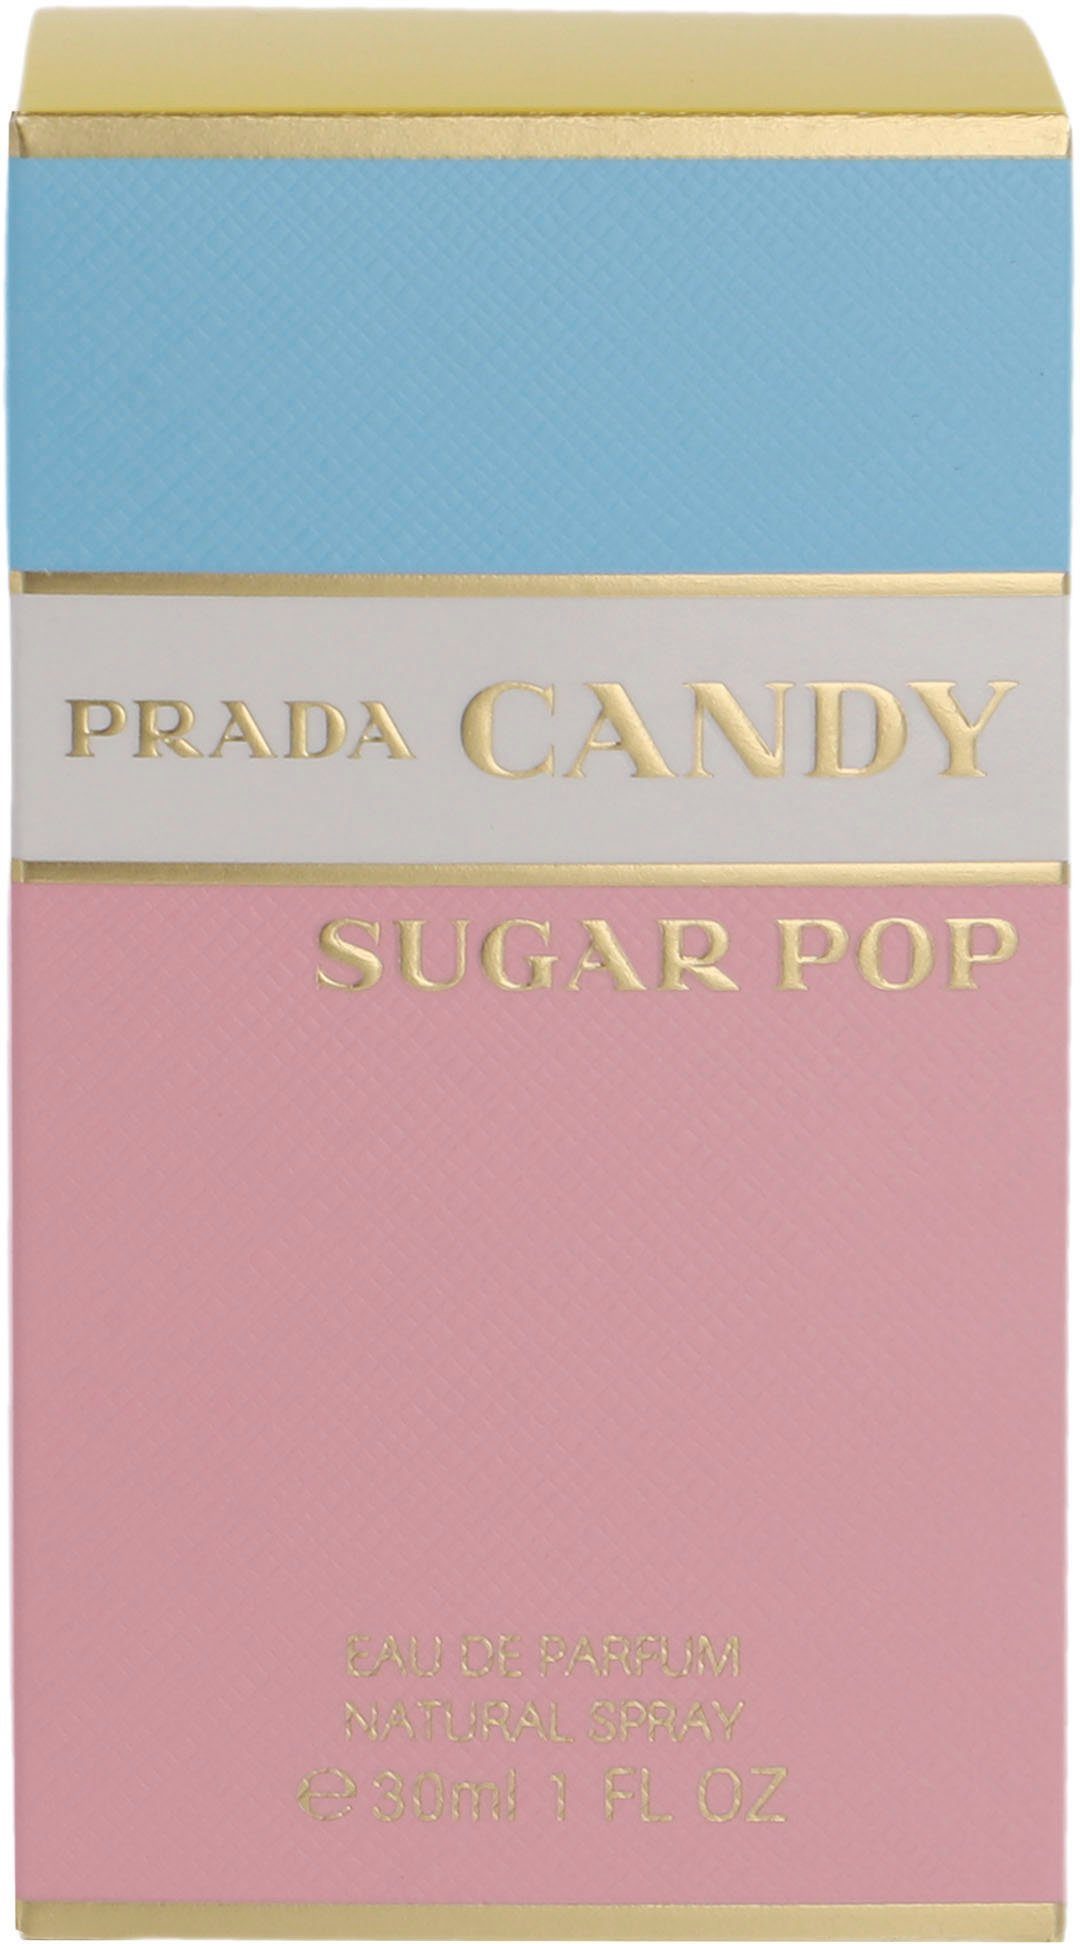 Damen Parfums PRADA Eau de Parfum Candy Sugar Pop